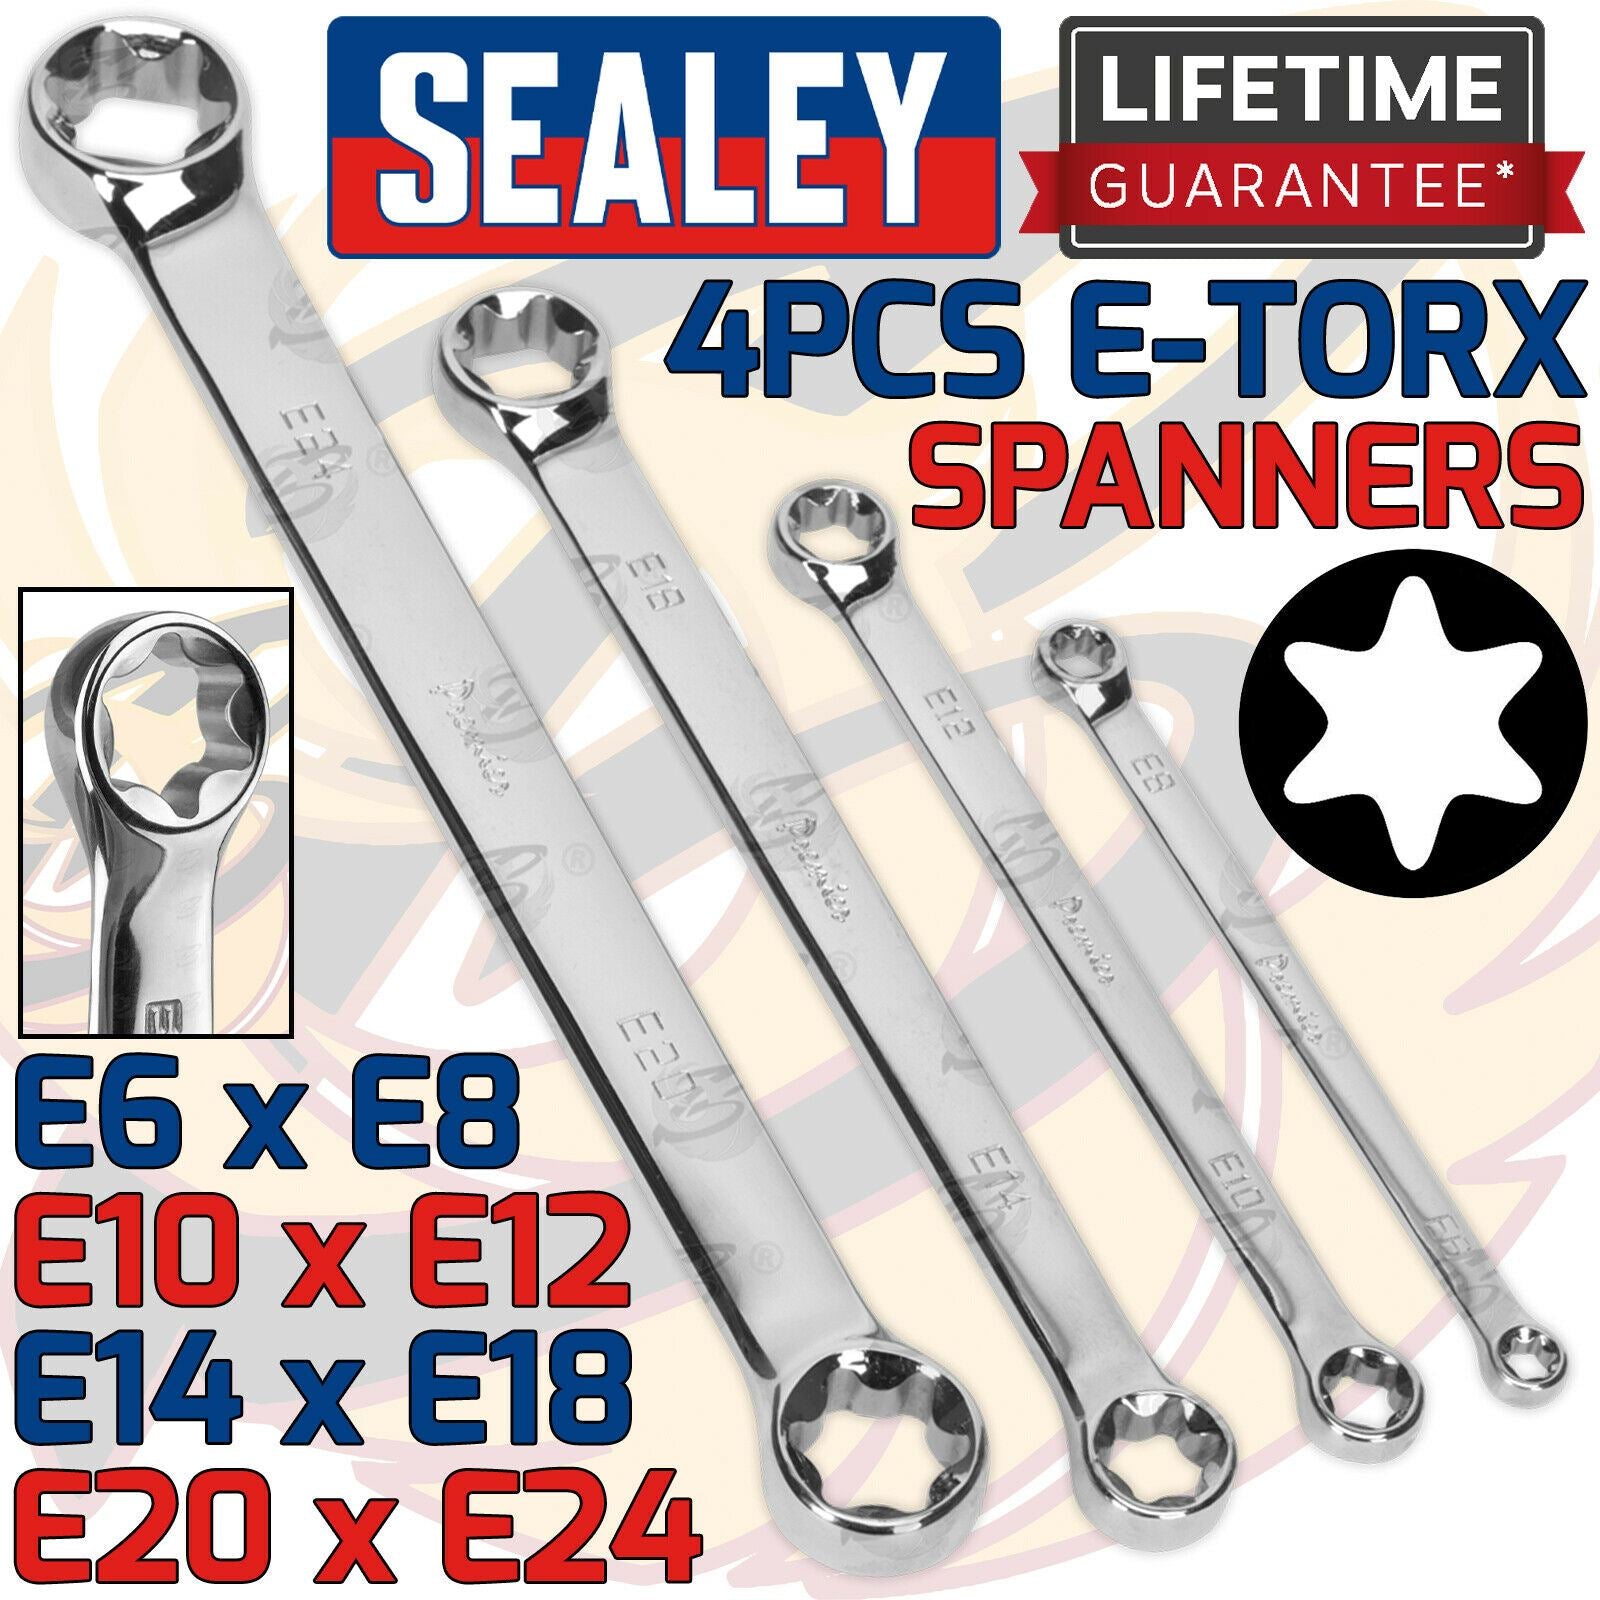 SEALEY 4PCS E - TORX SPANNER SET E6 - E24